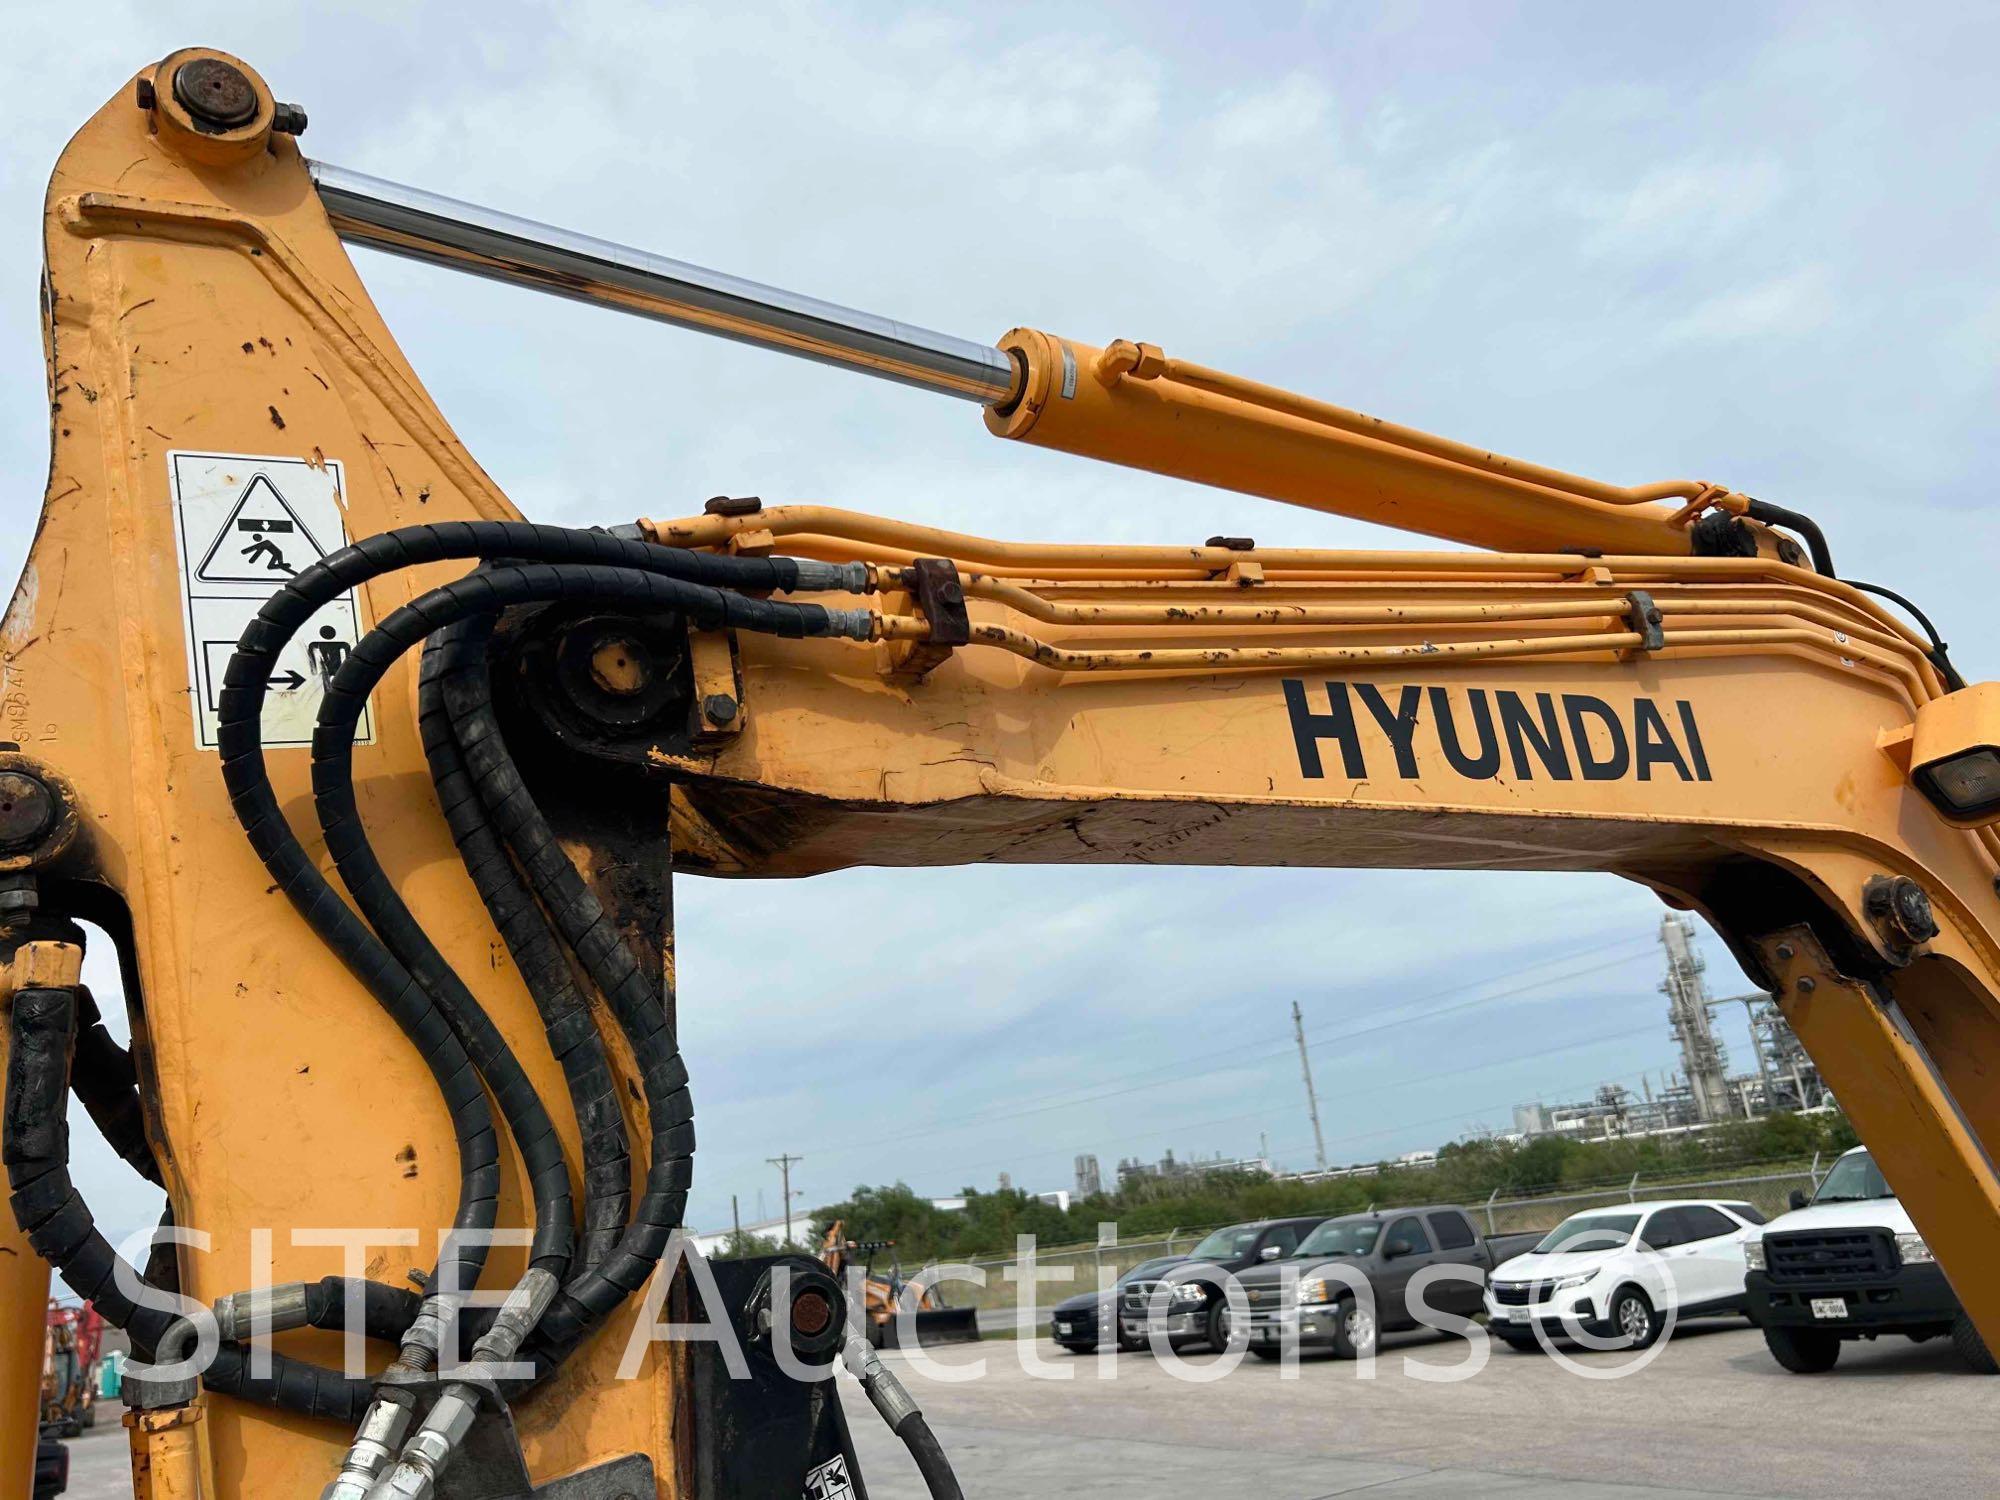 2014 Hyundai Robex 55-9 Mini Excavator